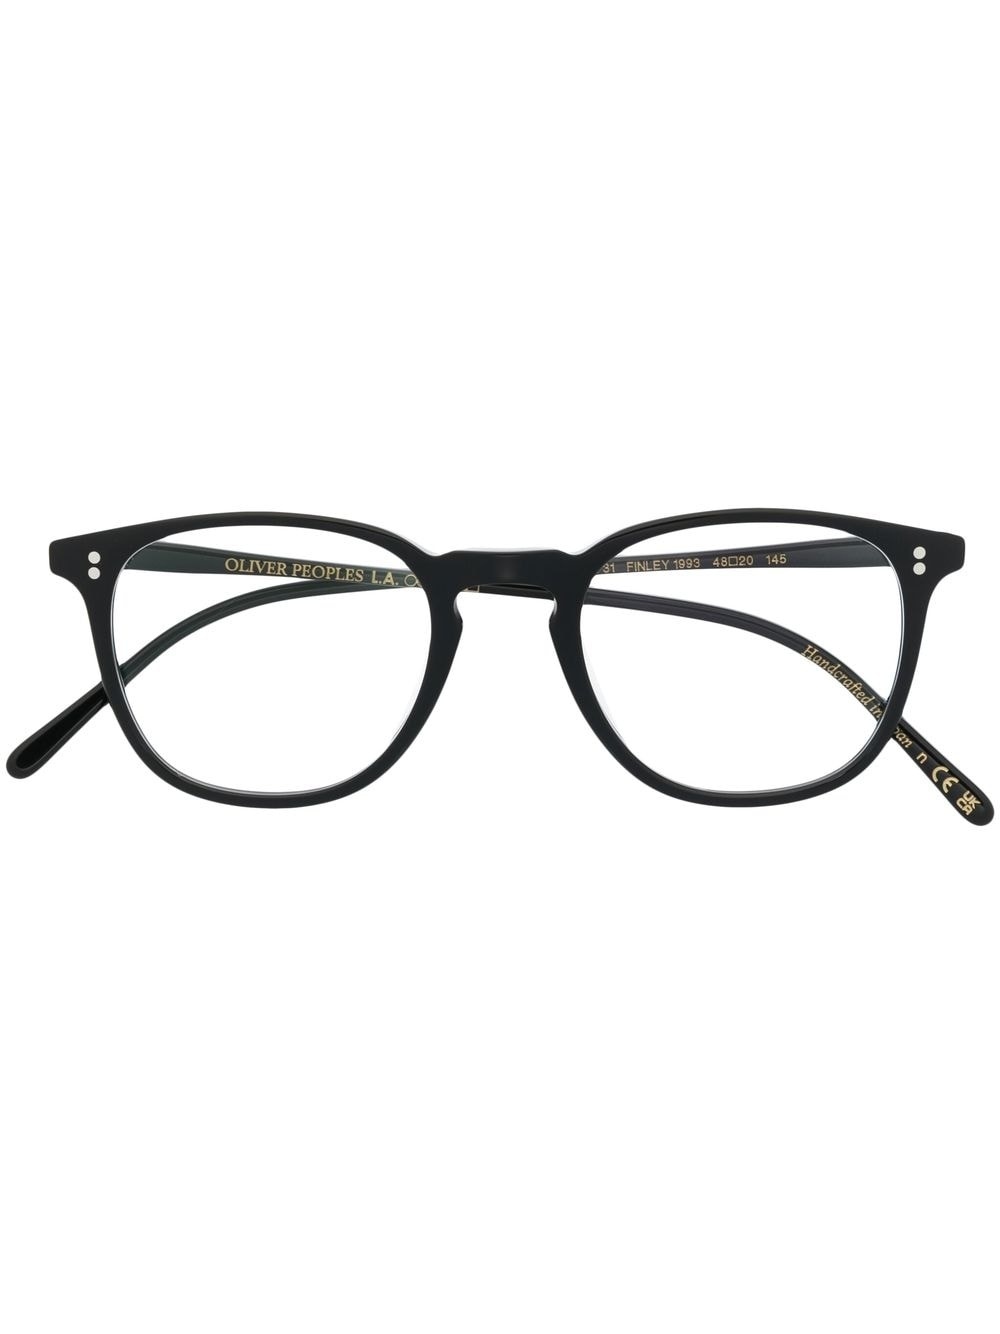 Finley 1993 optical glasses - 1